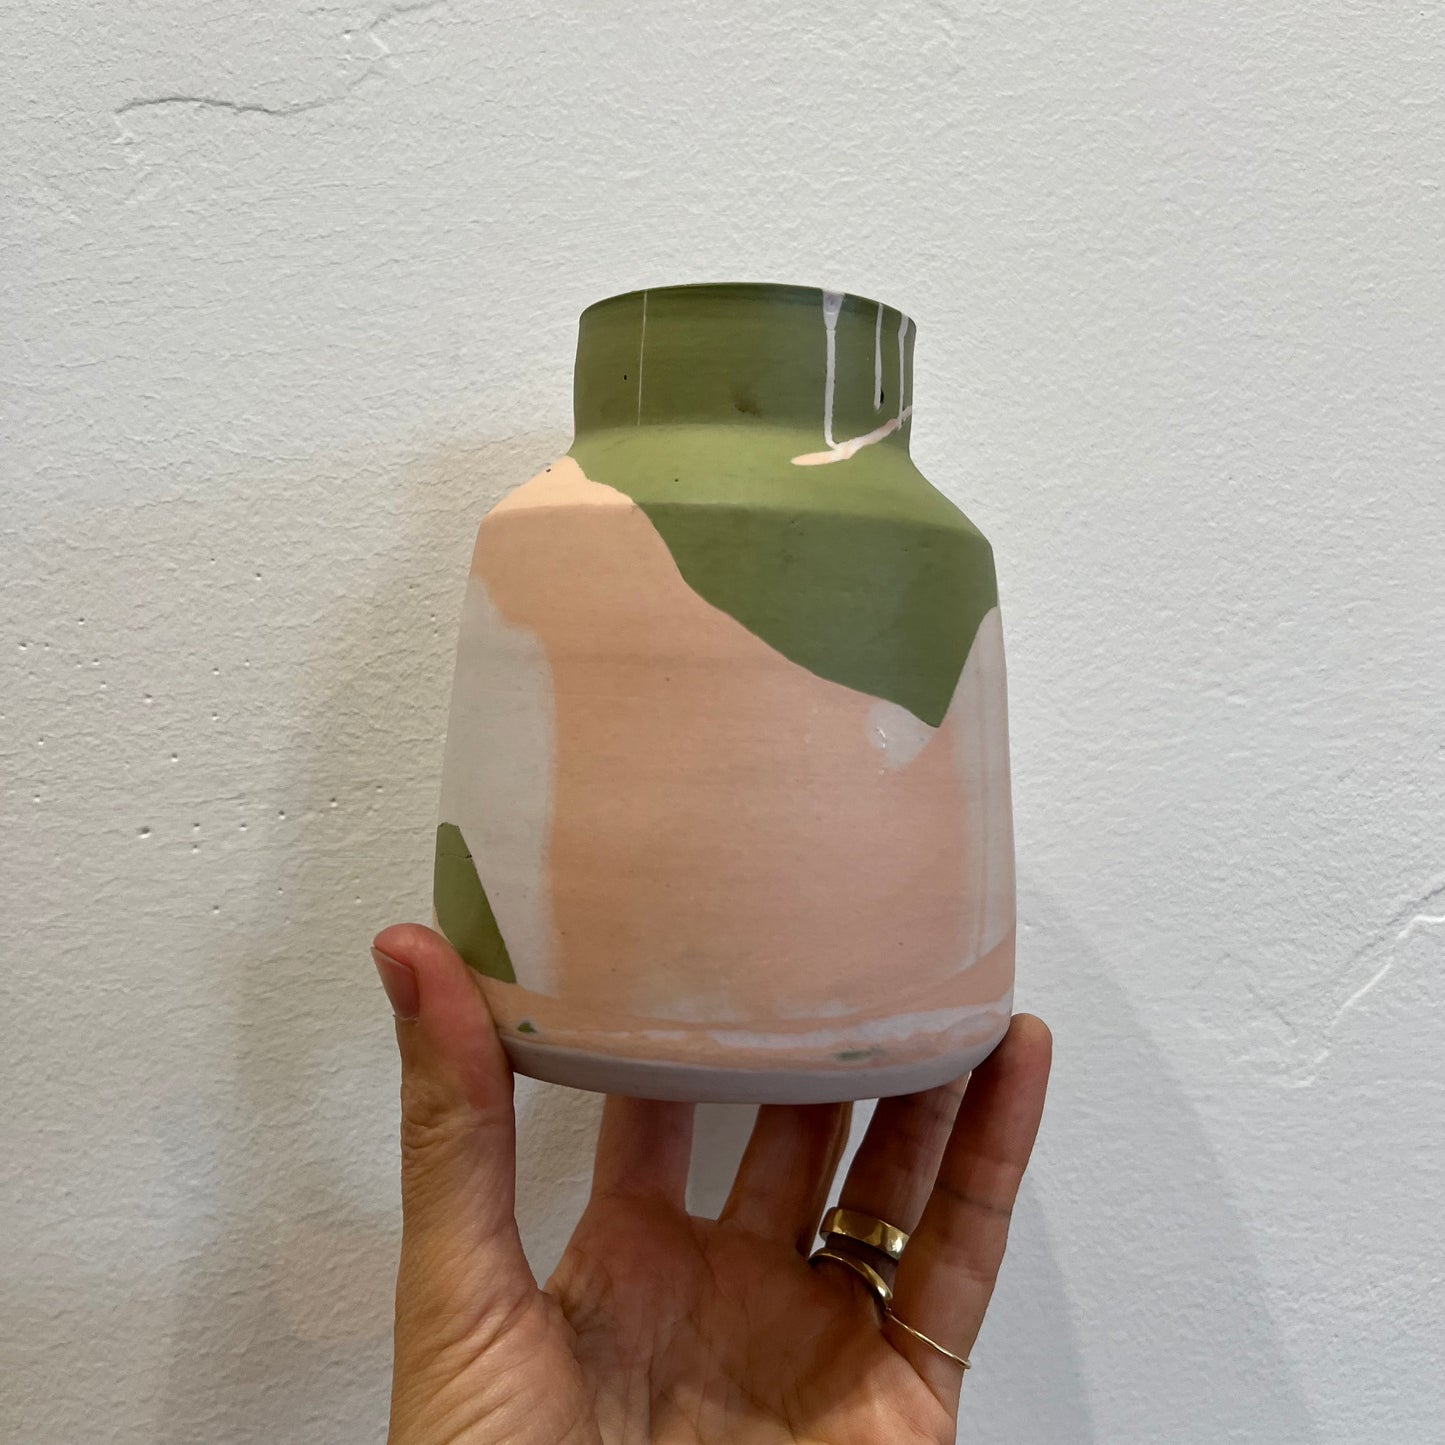 Slip Studio Vases